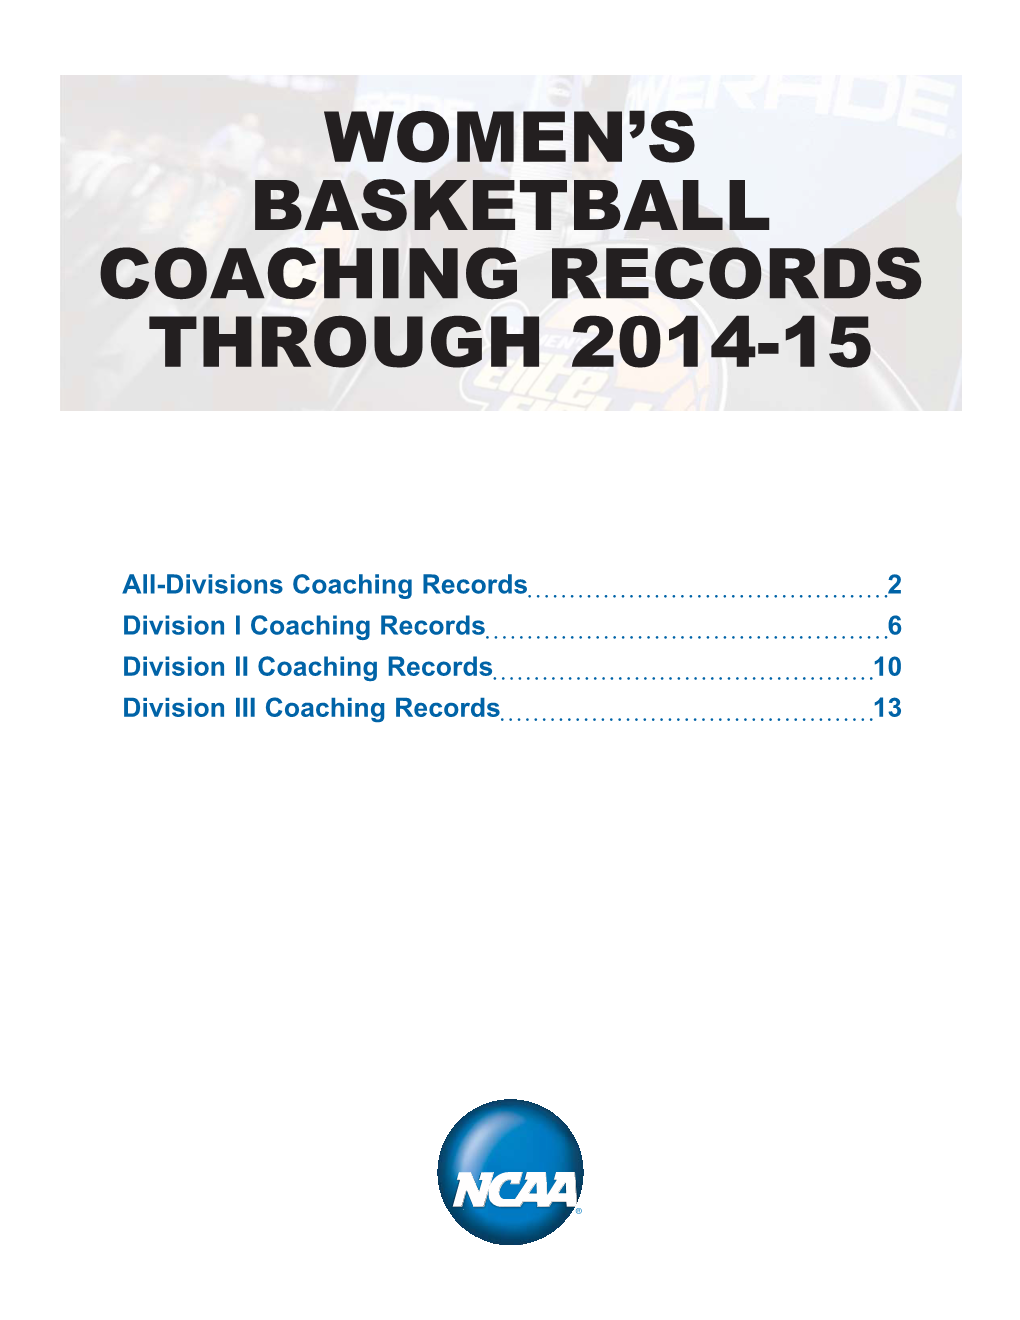 7 2016 WBB Coaching Records Through 15.Indd